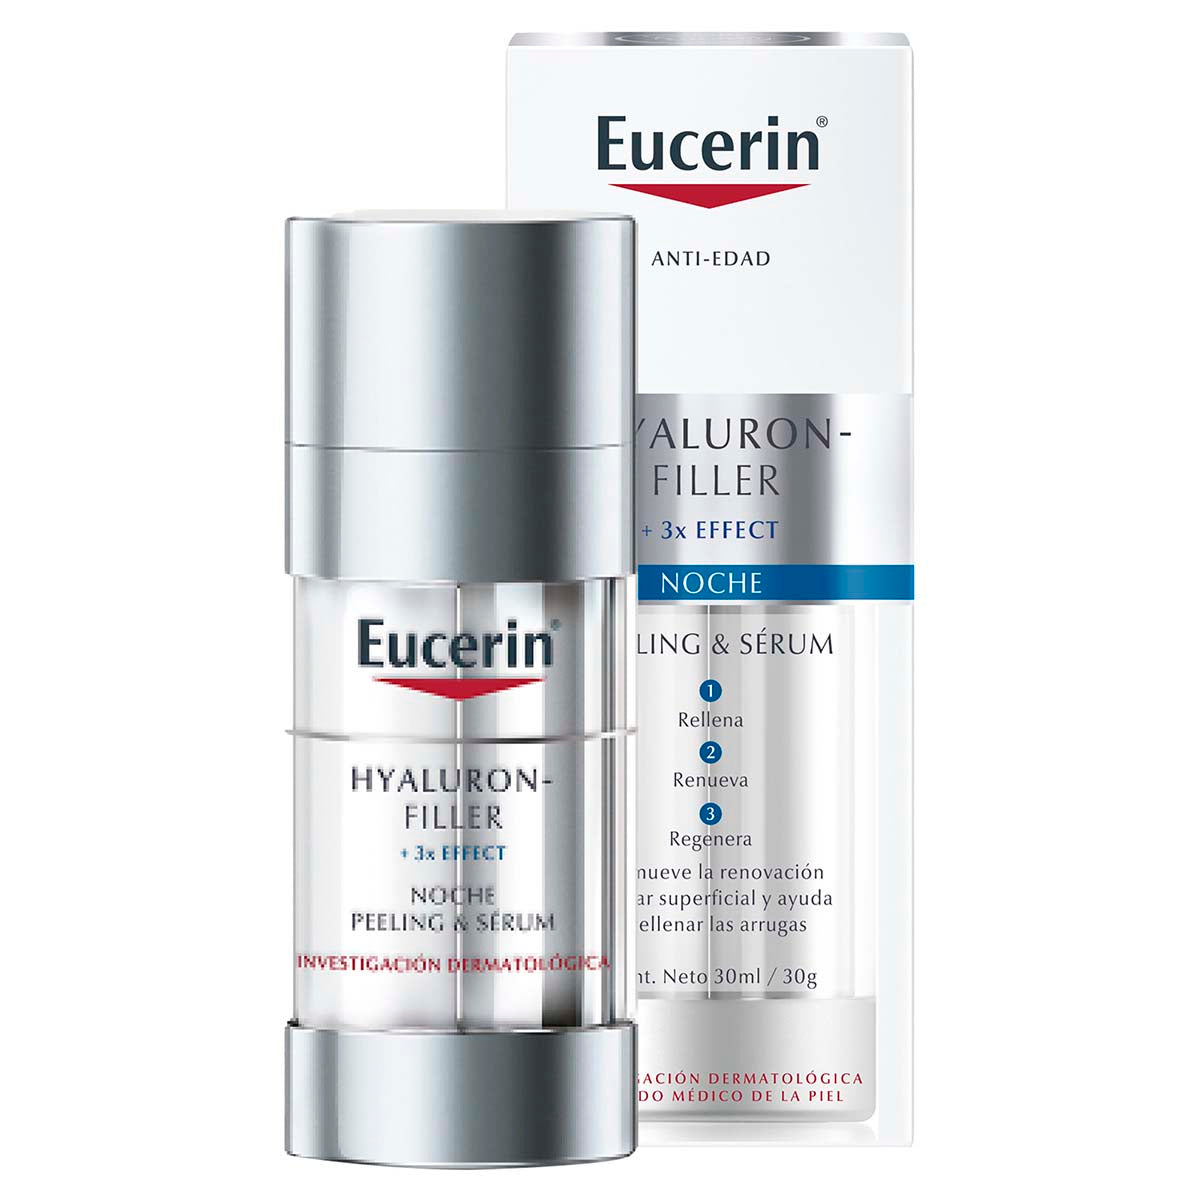 Eucerin hyaluron filler serum &amp; Peeling facial antiarrugas noche 30ml.